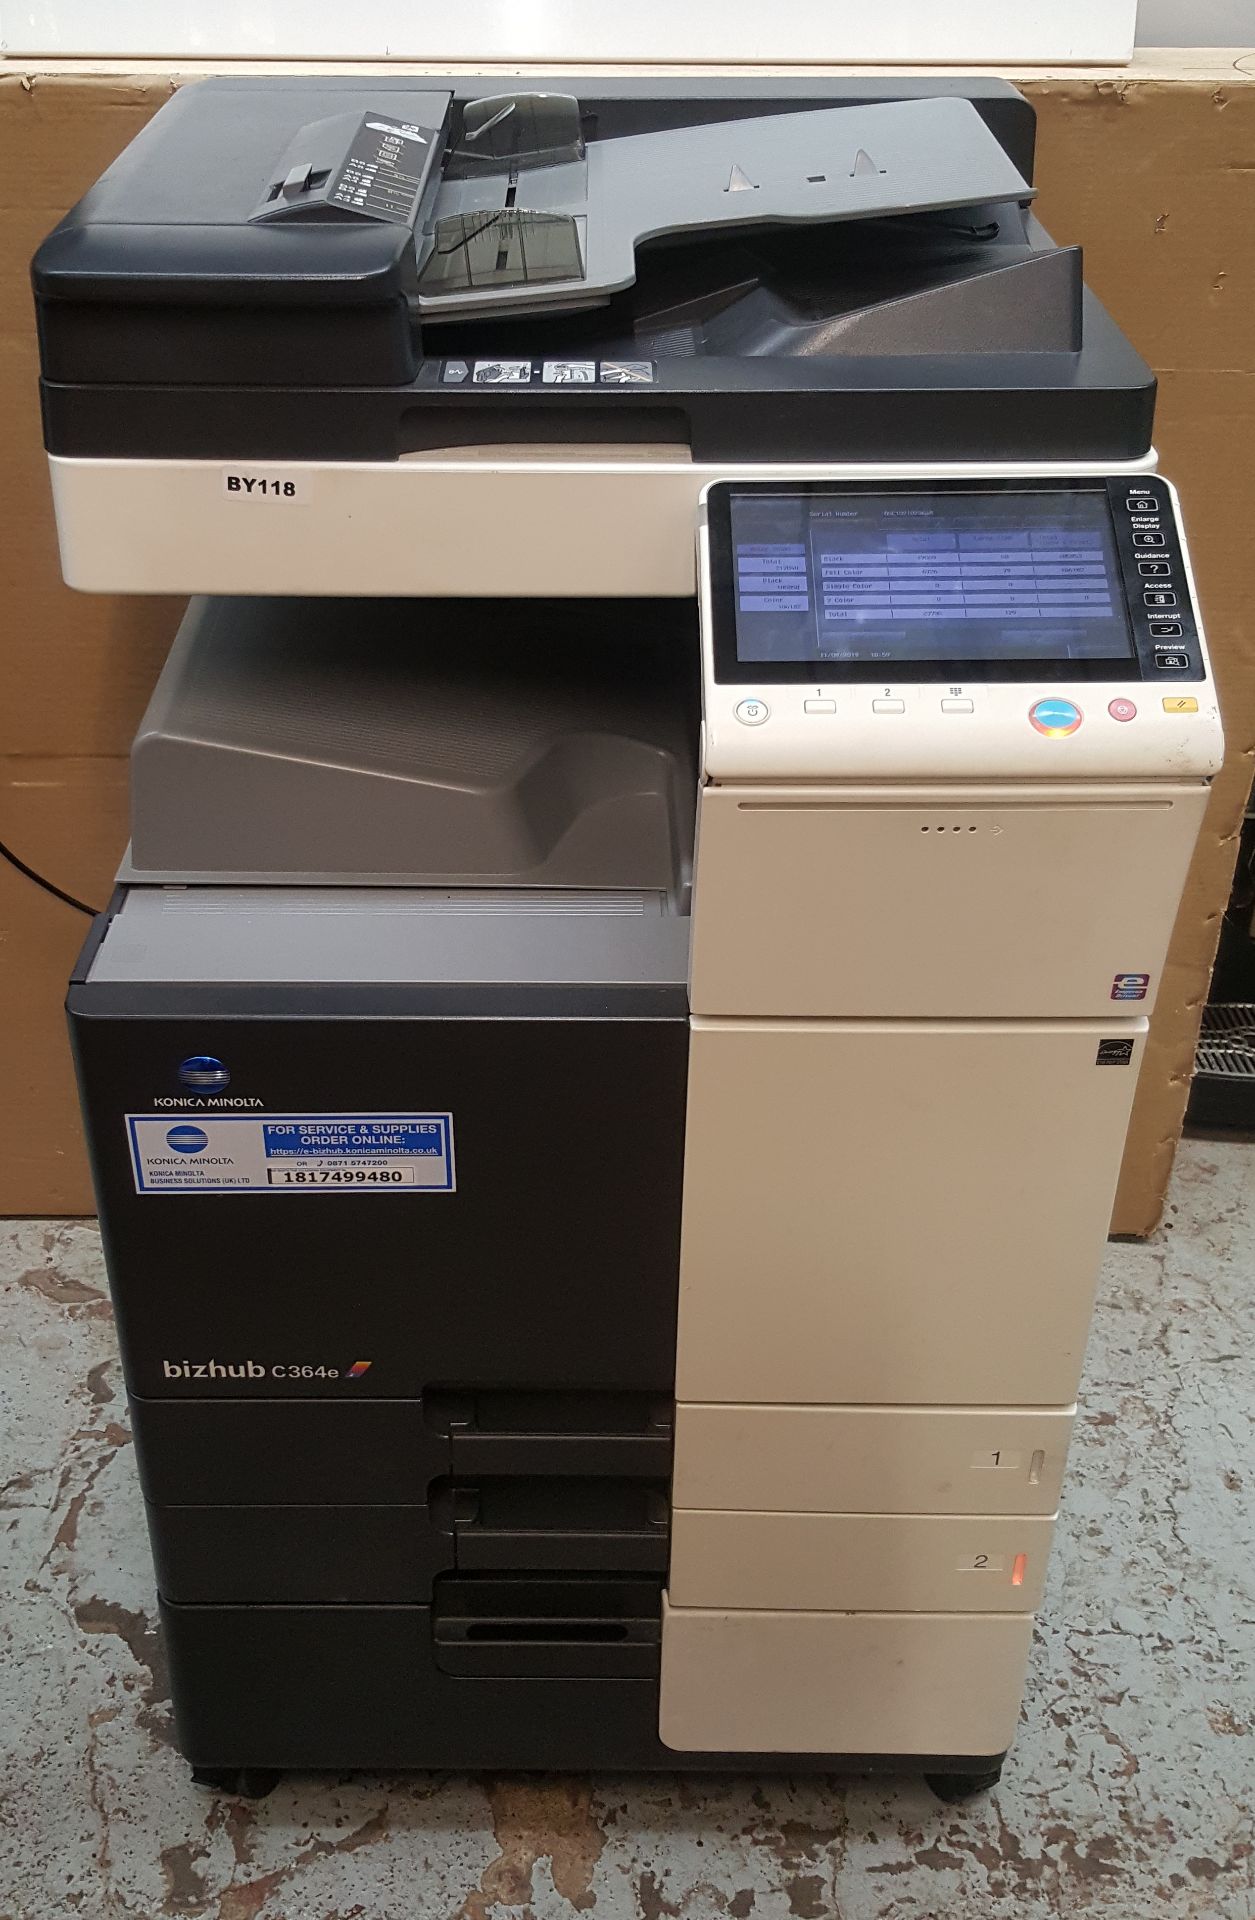 1 x Konica Minolta Bizhub C364e Colour Multifunction Office Photocopier Printer - BY118 - CL429 -